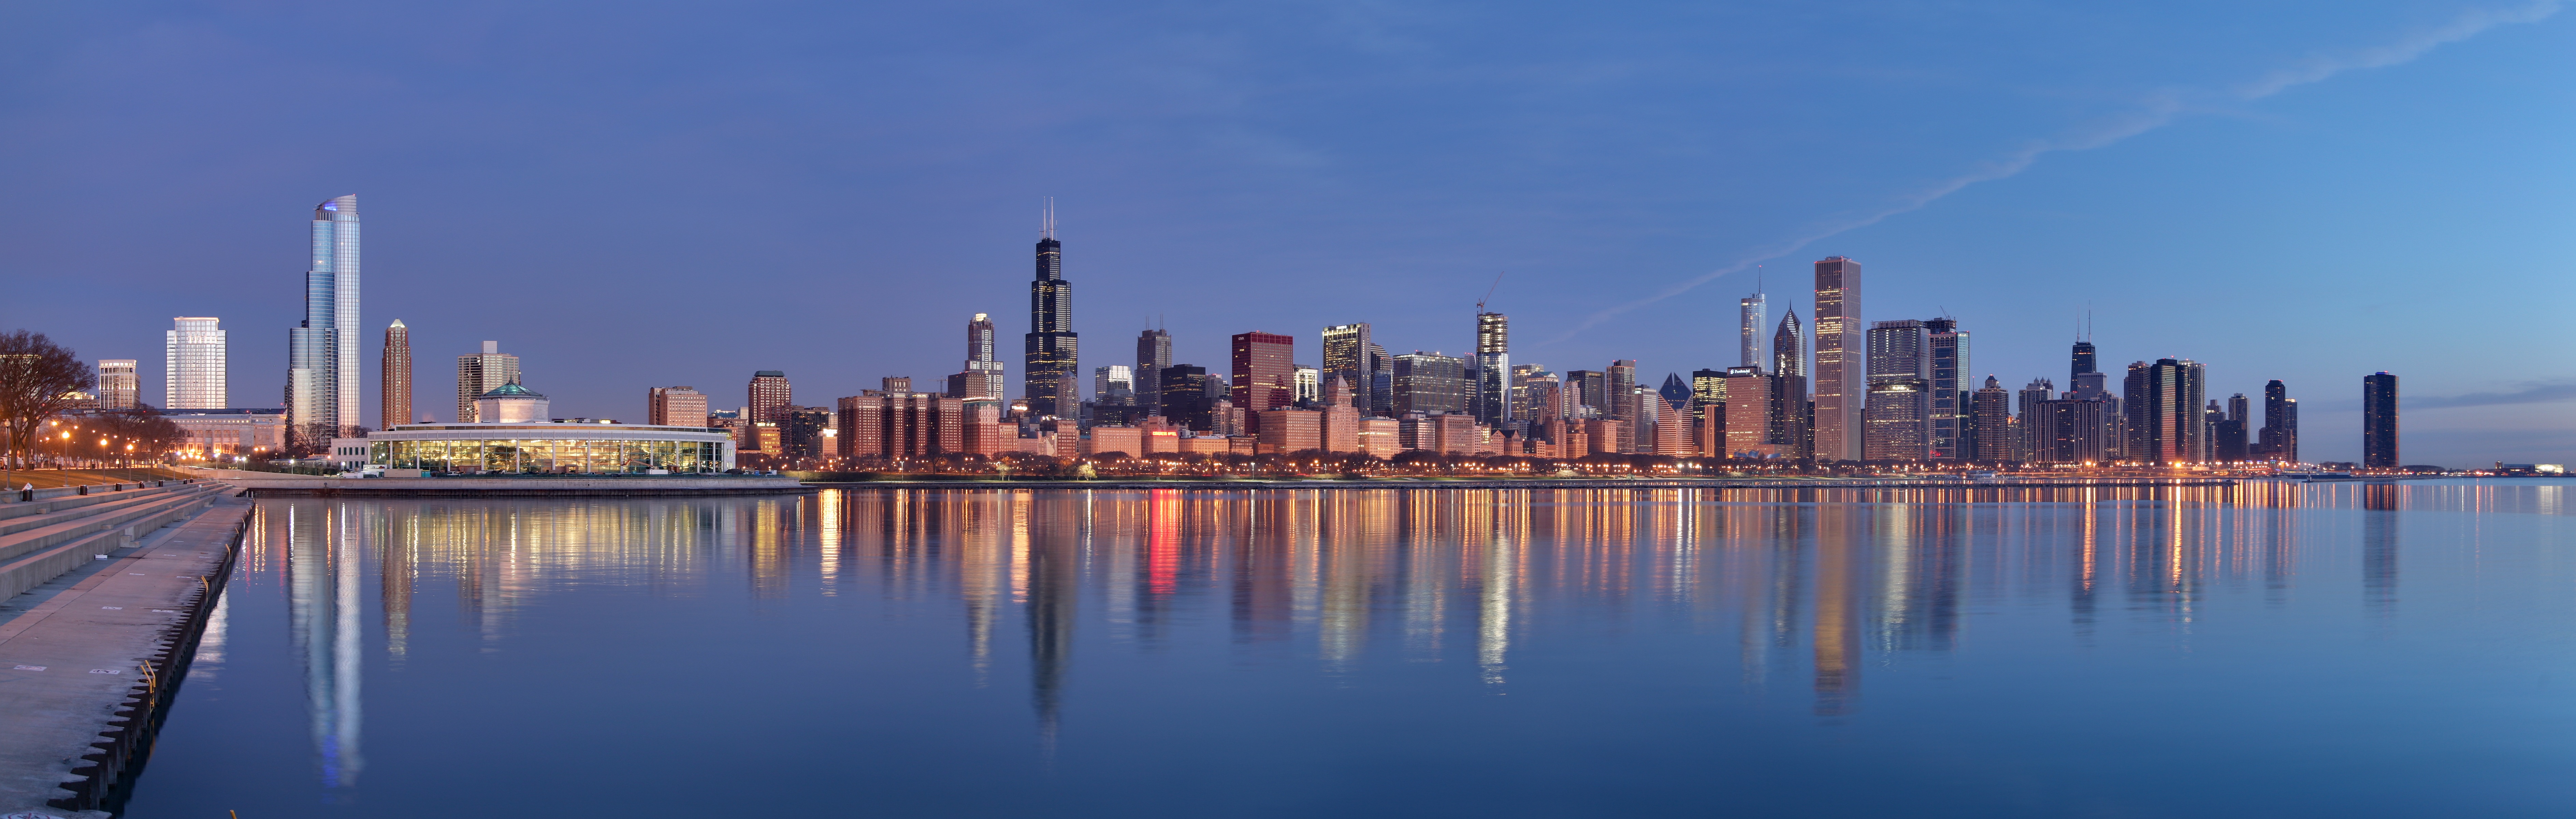 Top Ten United States Smart Cities – Chicago, Illinois – 7/10